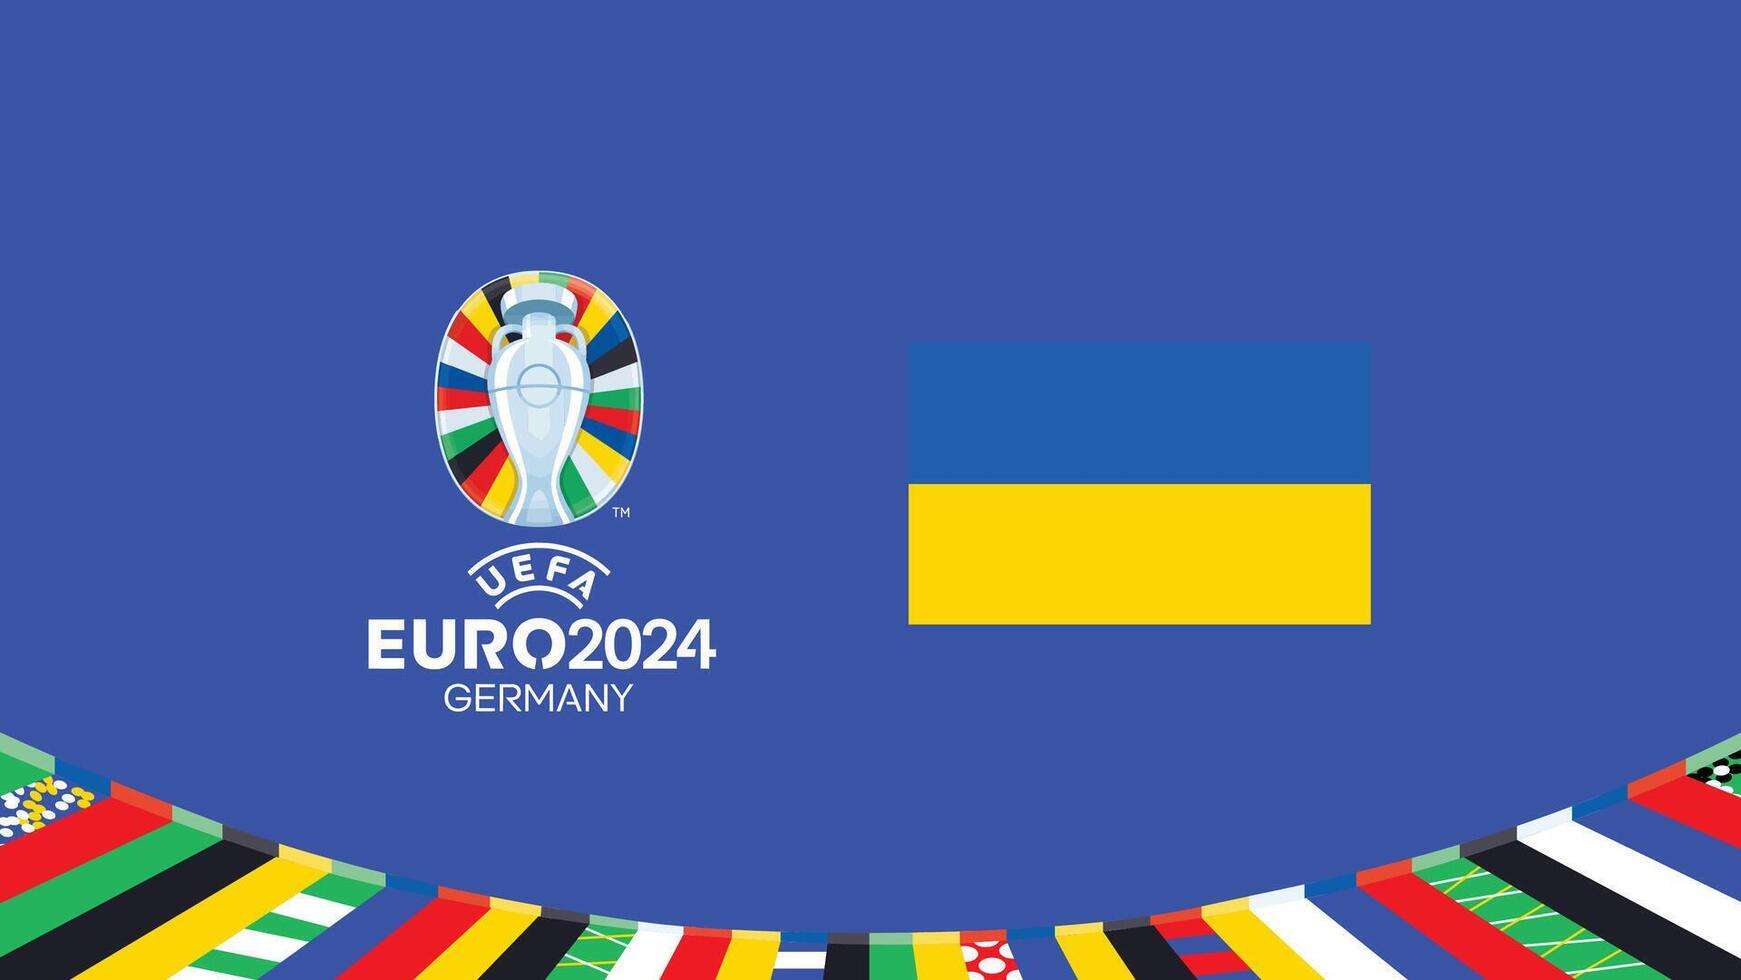 Euro 2024 Ukraine Flag Emblem Teams Design With Official Symbol Logo Abstract Countries European Football Illustration vector